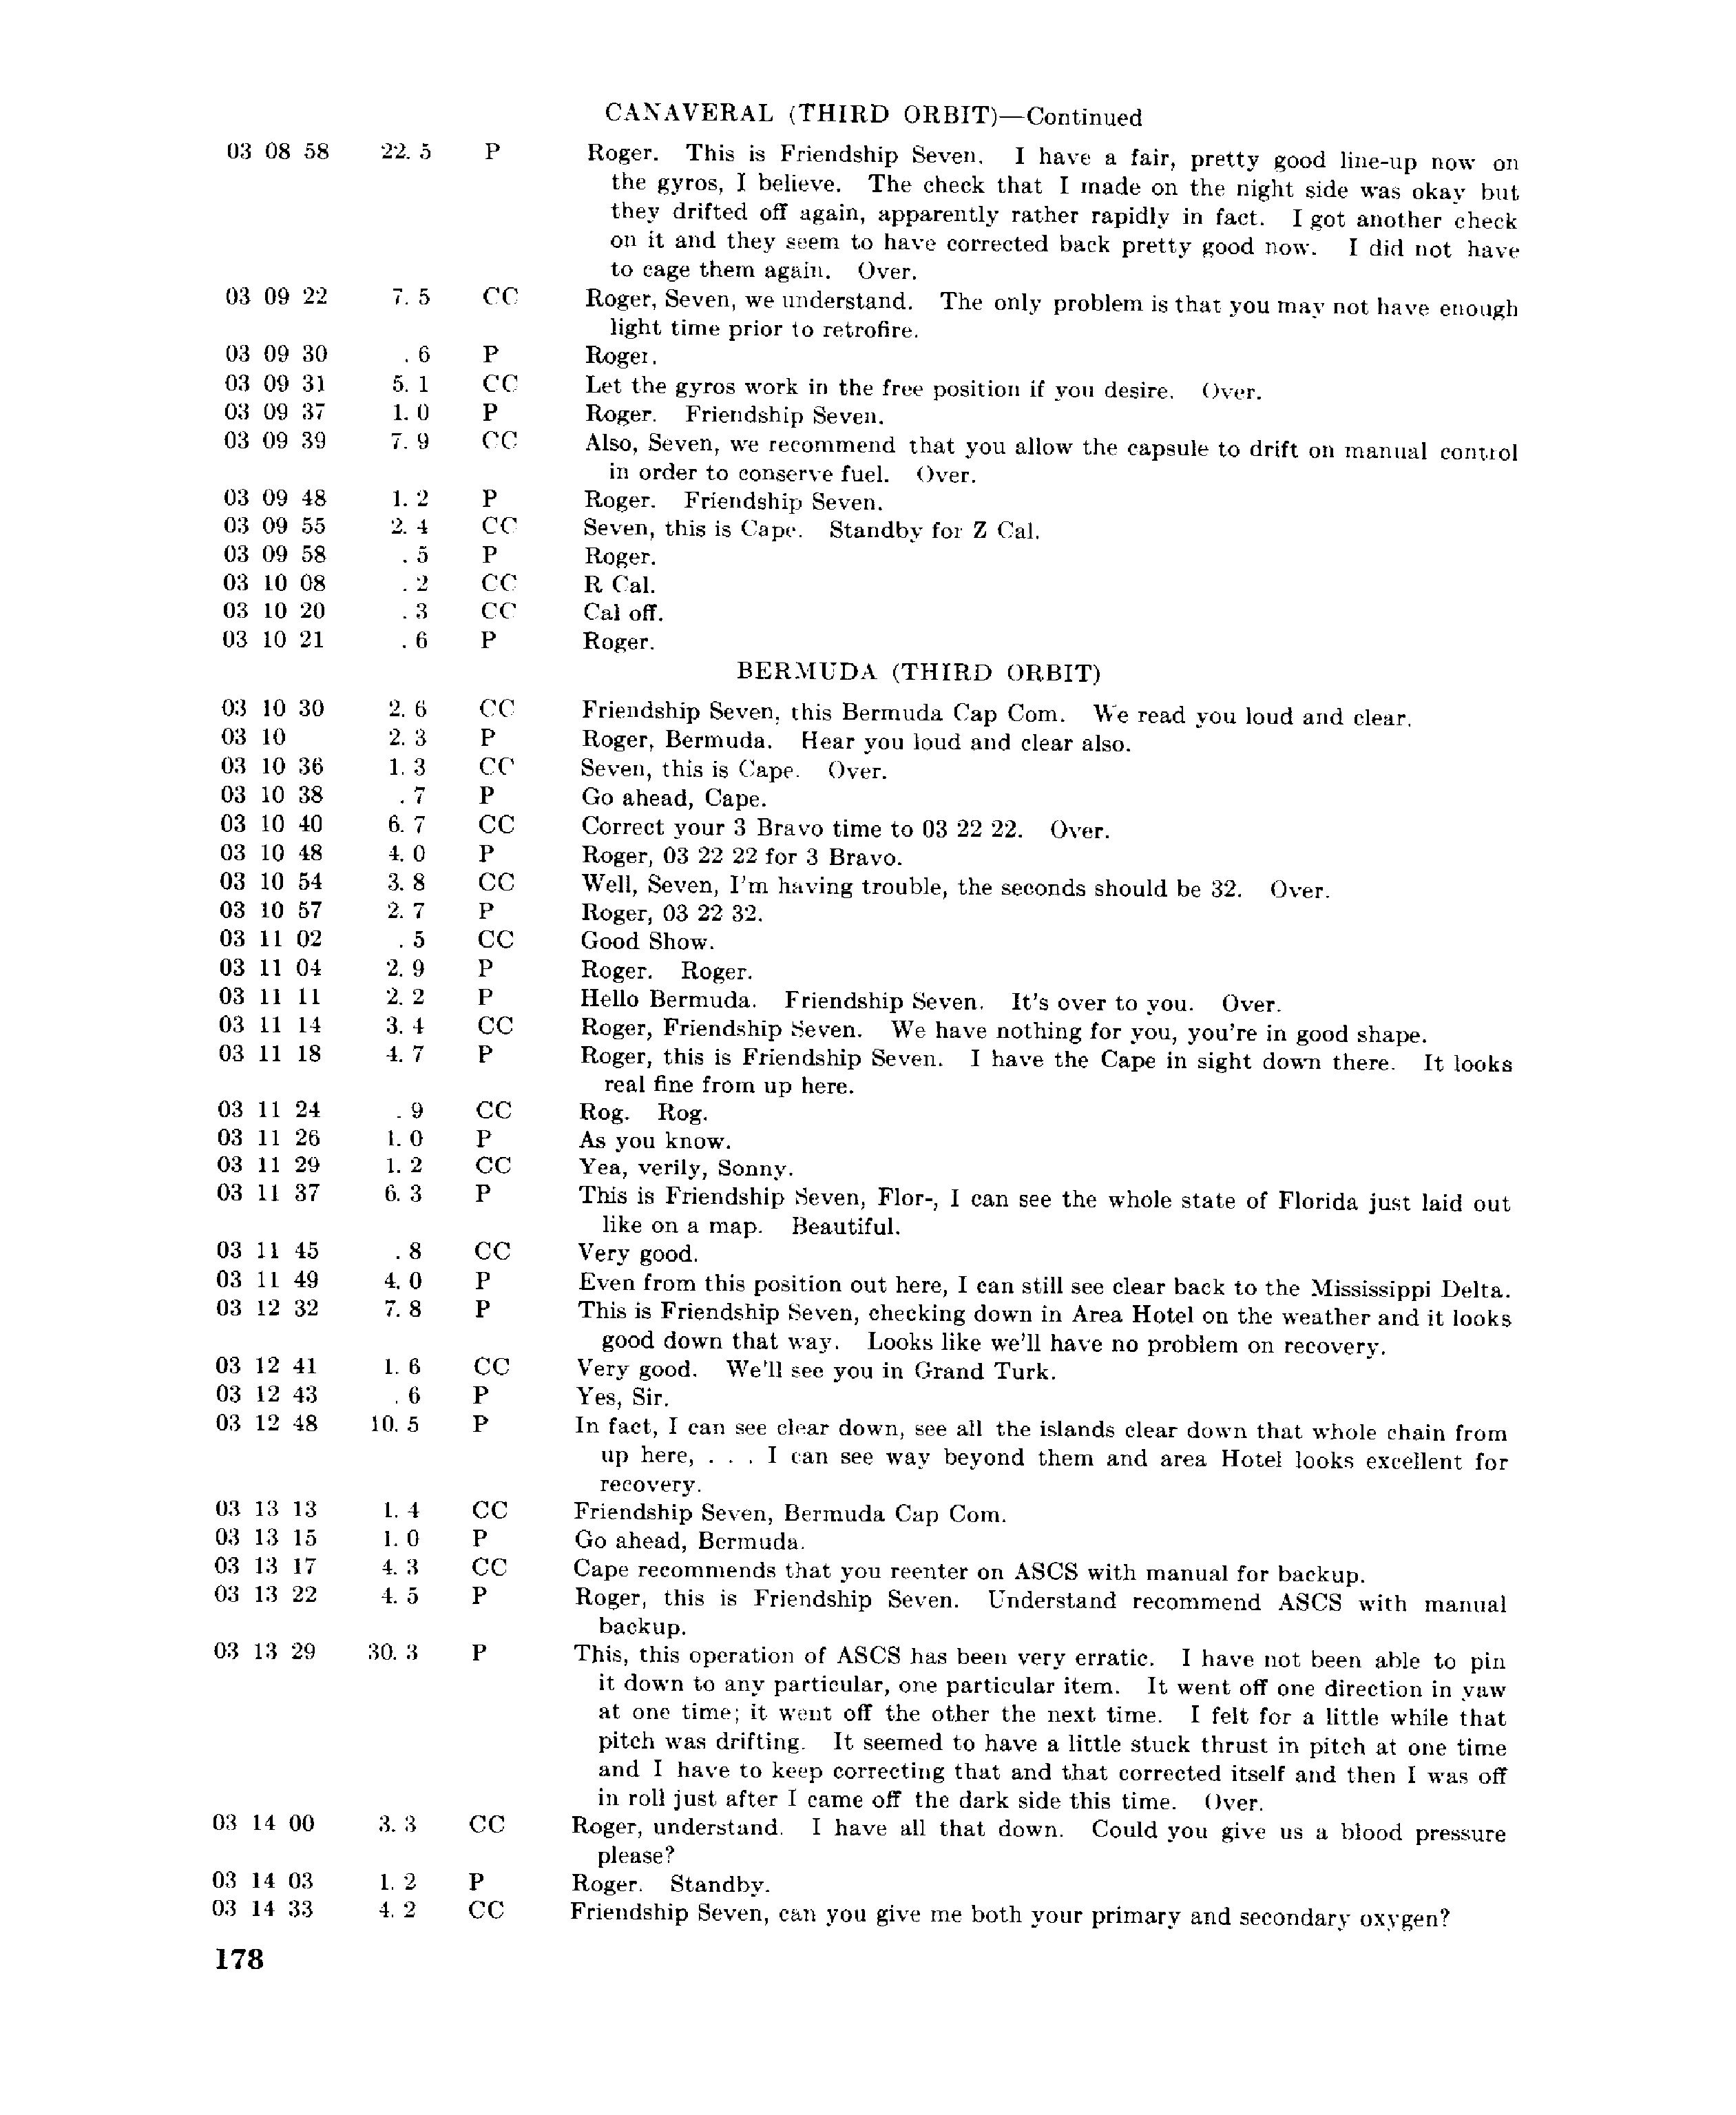 Page 177 of Mercury 6’s original transcript